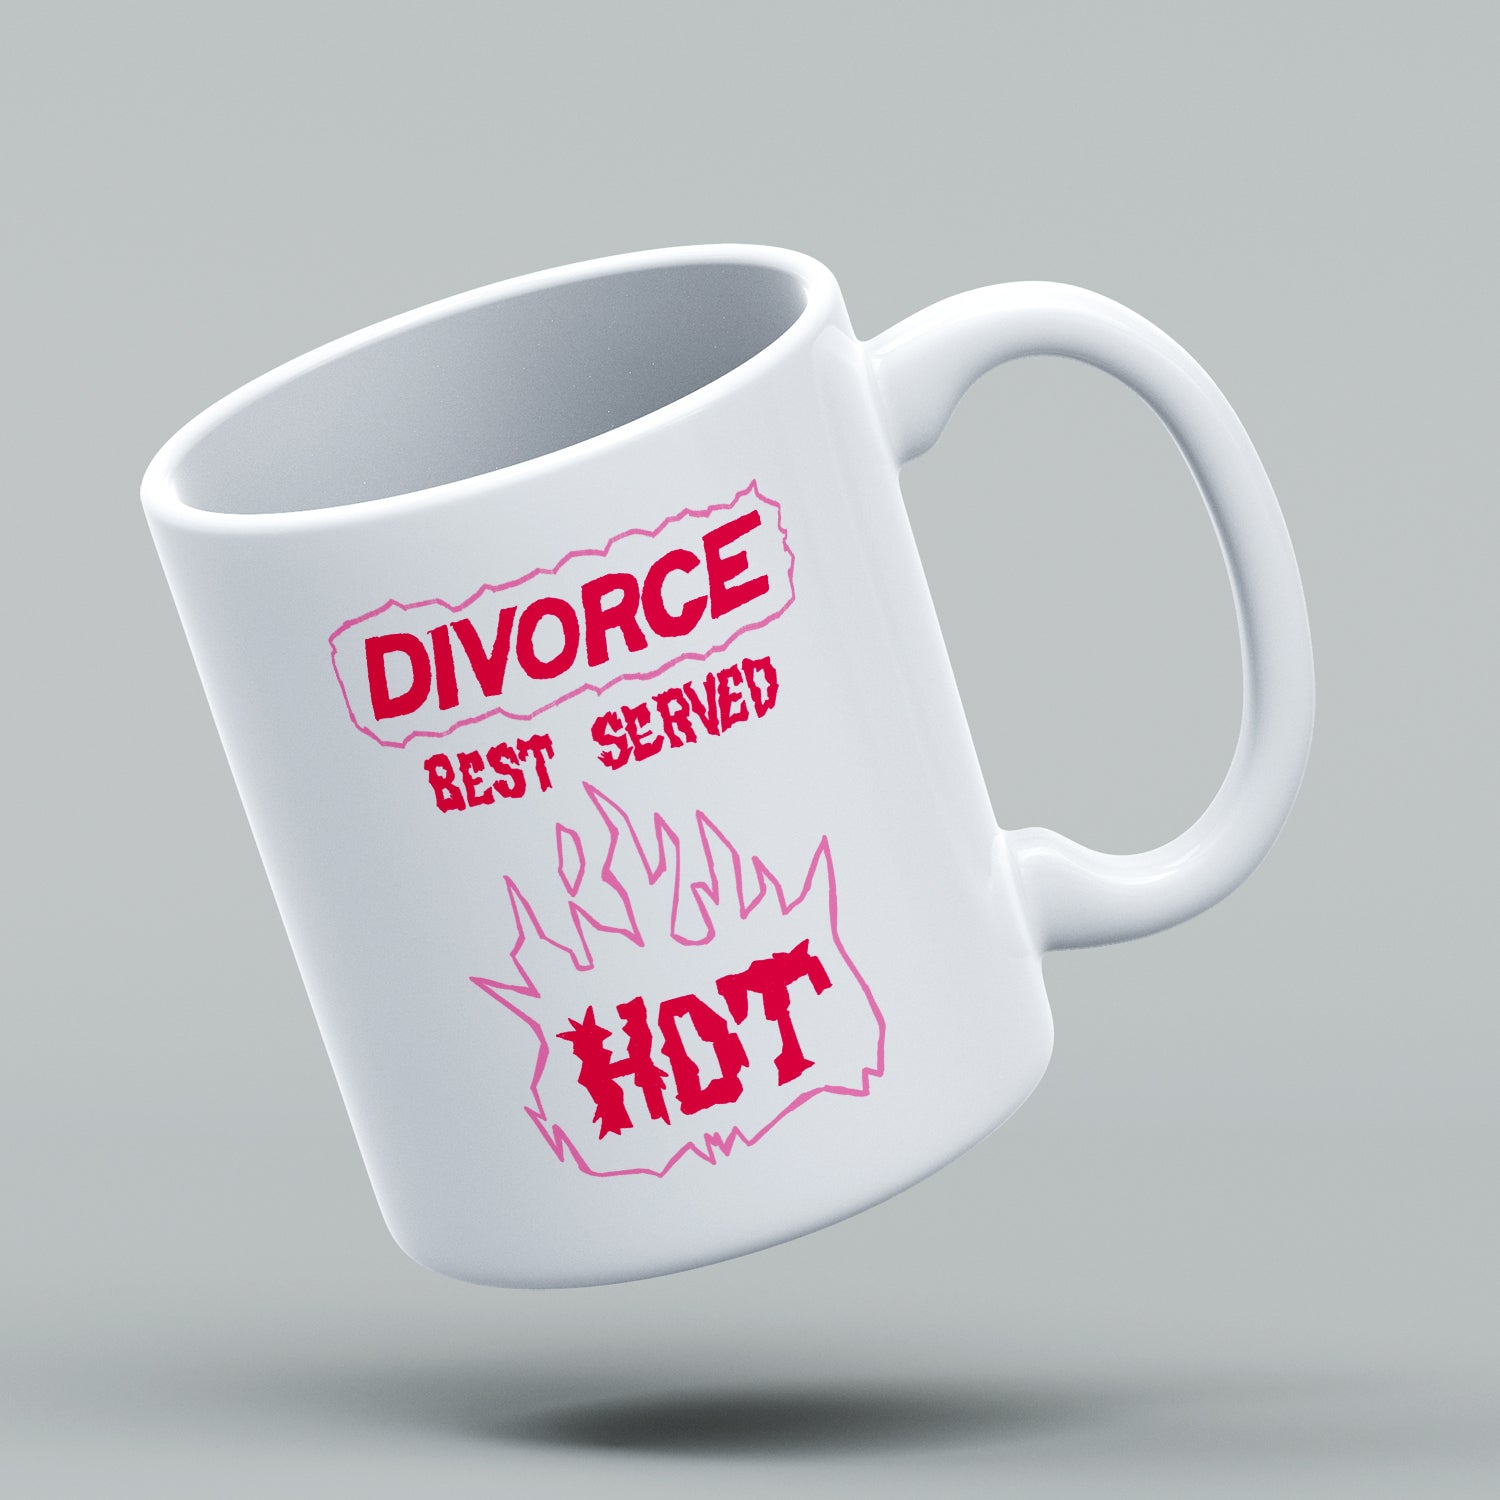 Divorce - Heady Metal Mug